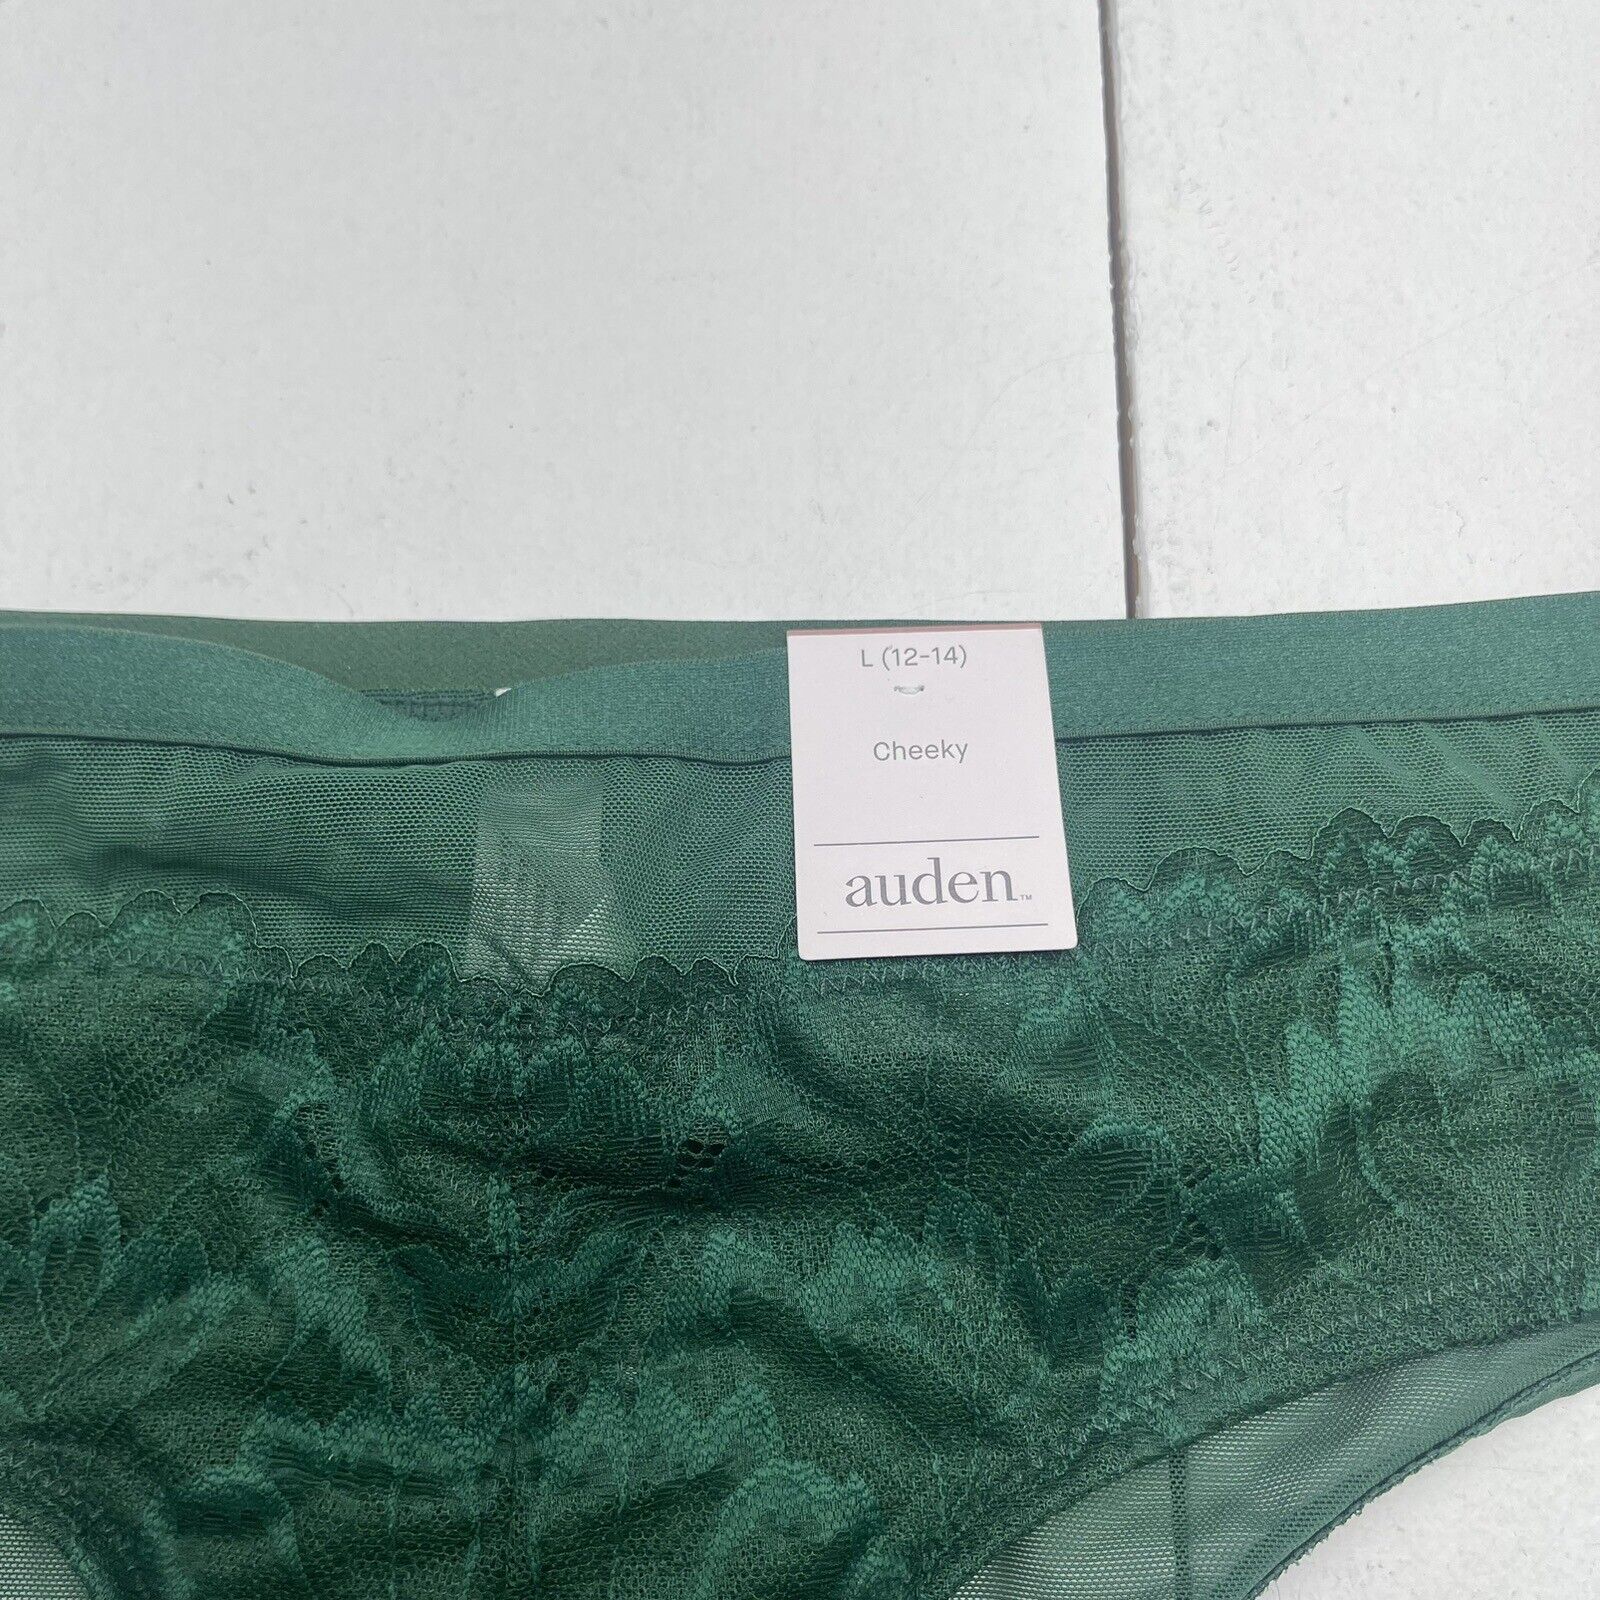 Auden Green Cheeky Lace Underwear Women's Size Large New - beyond exchange